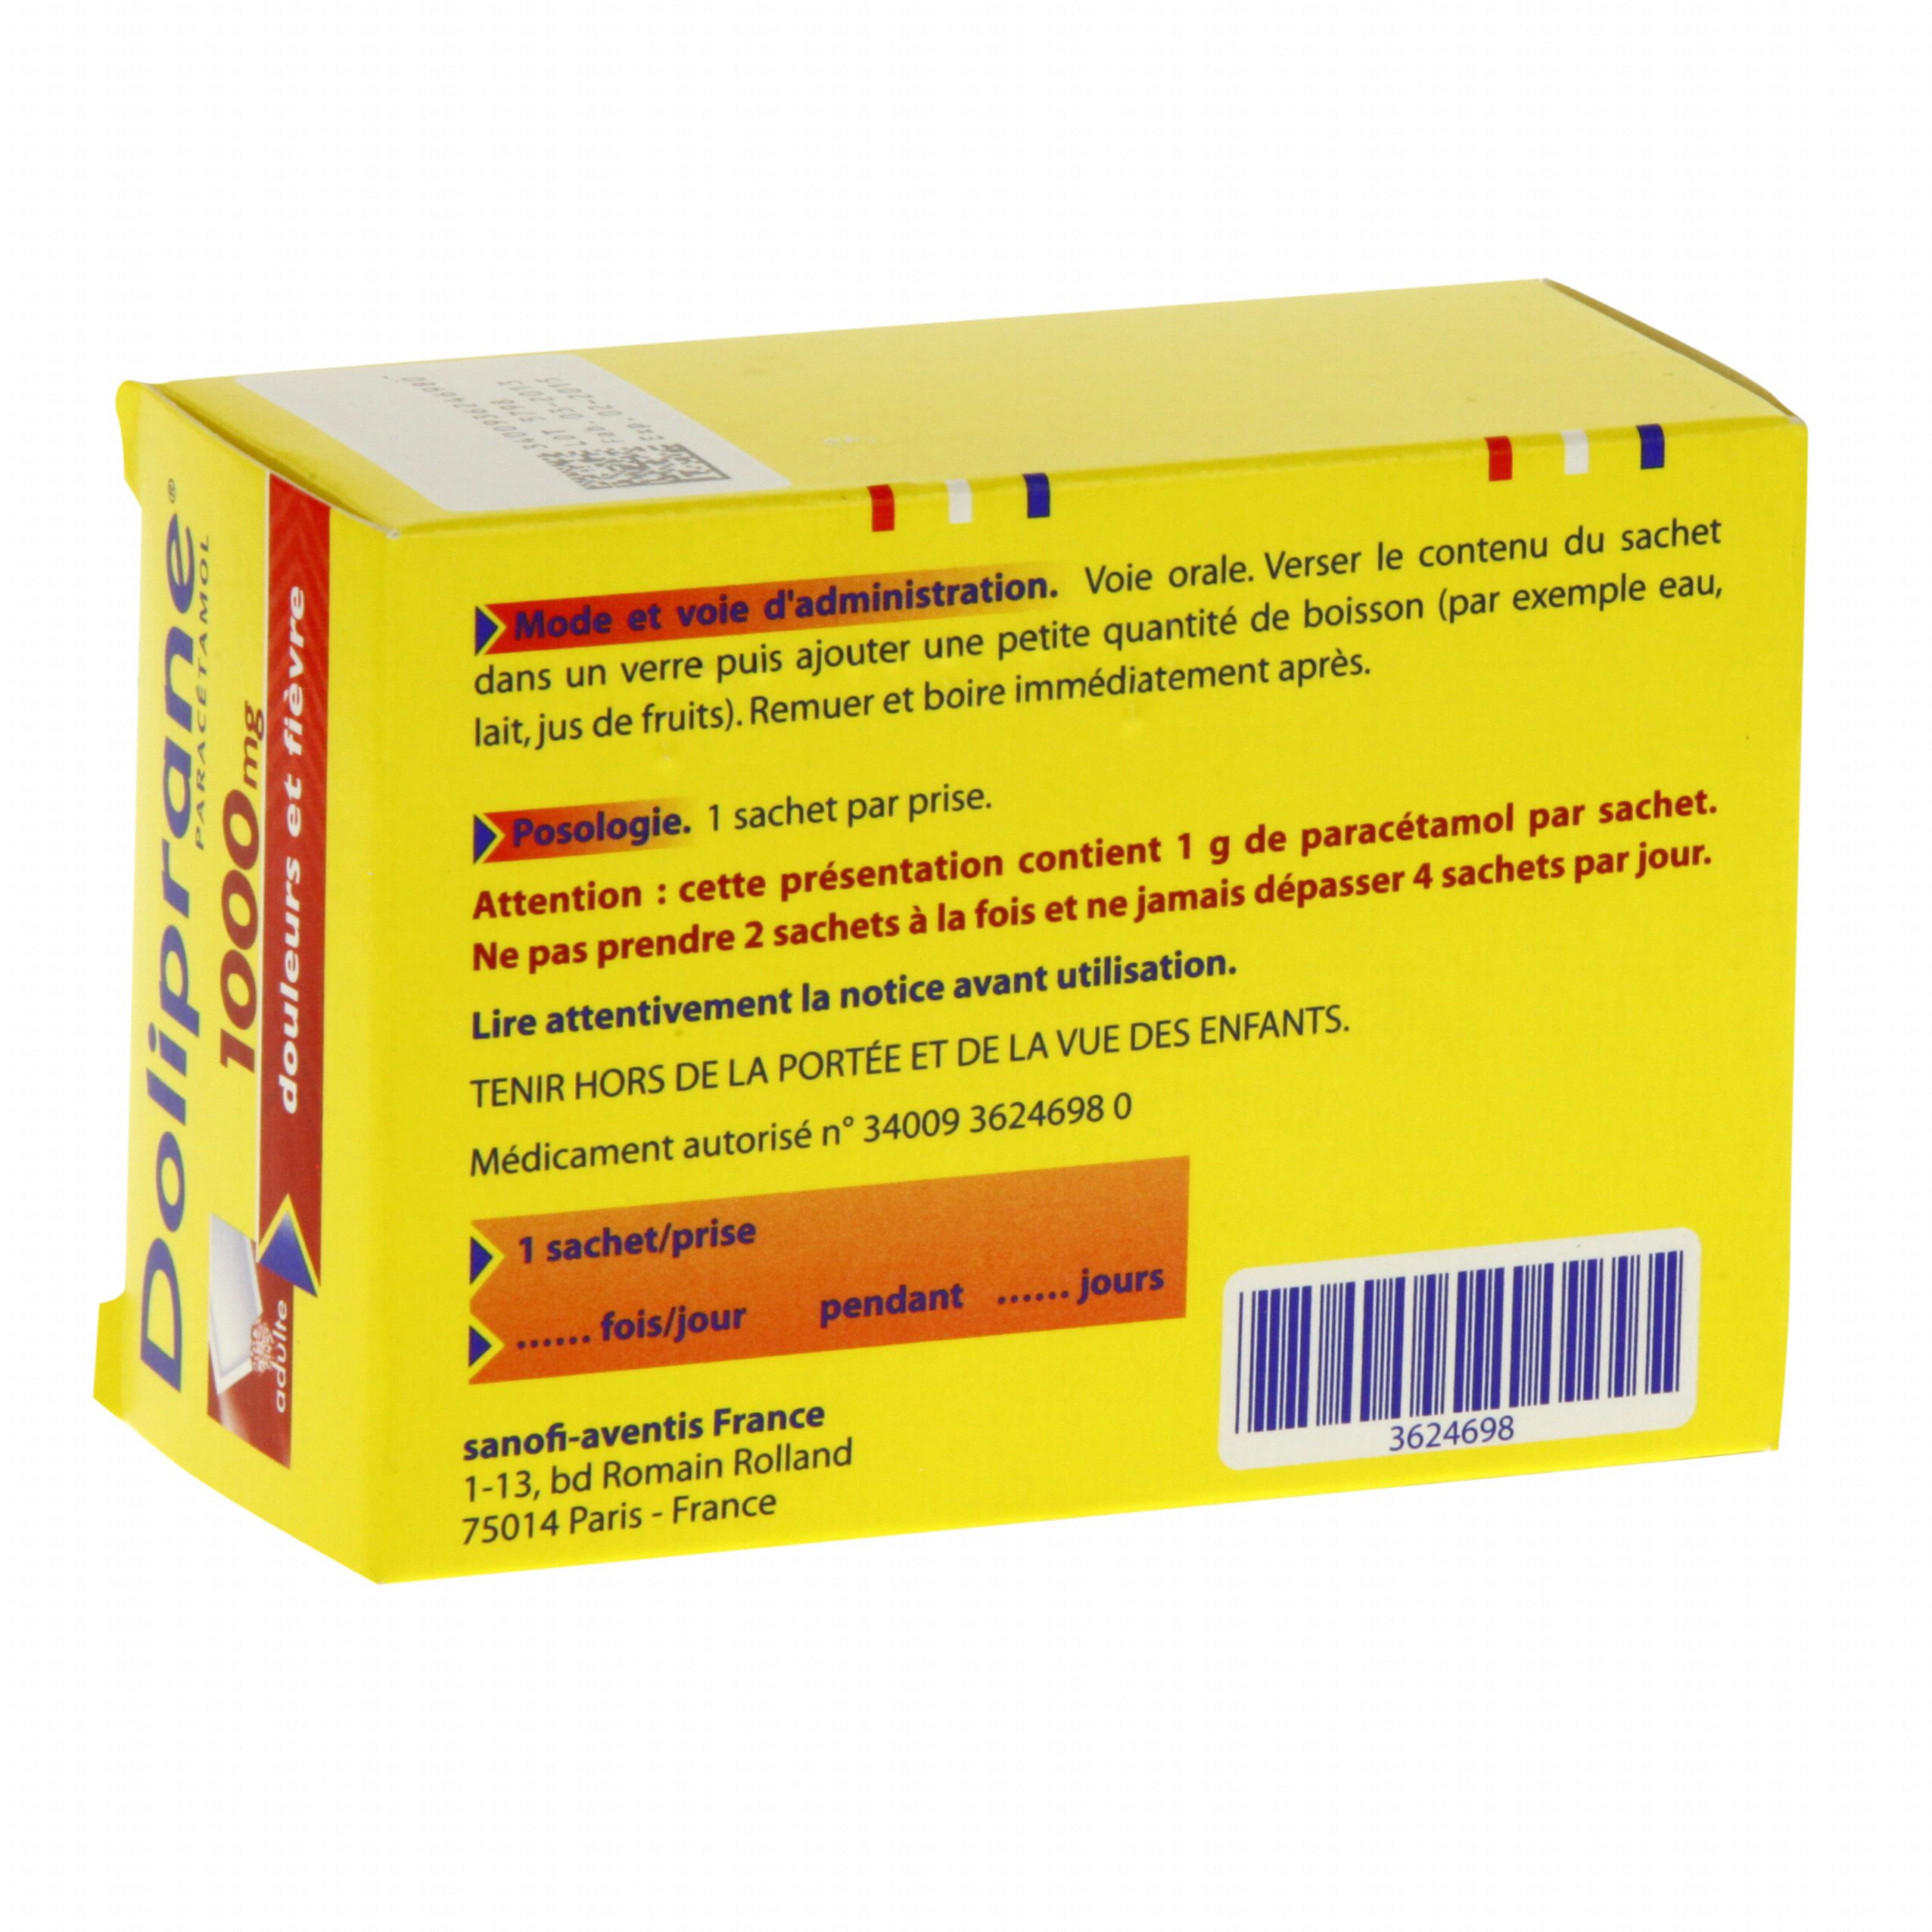 DOLIPRANE 1000mg Poudre - 8 sachets Pharmacie en ligne FRANCE